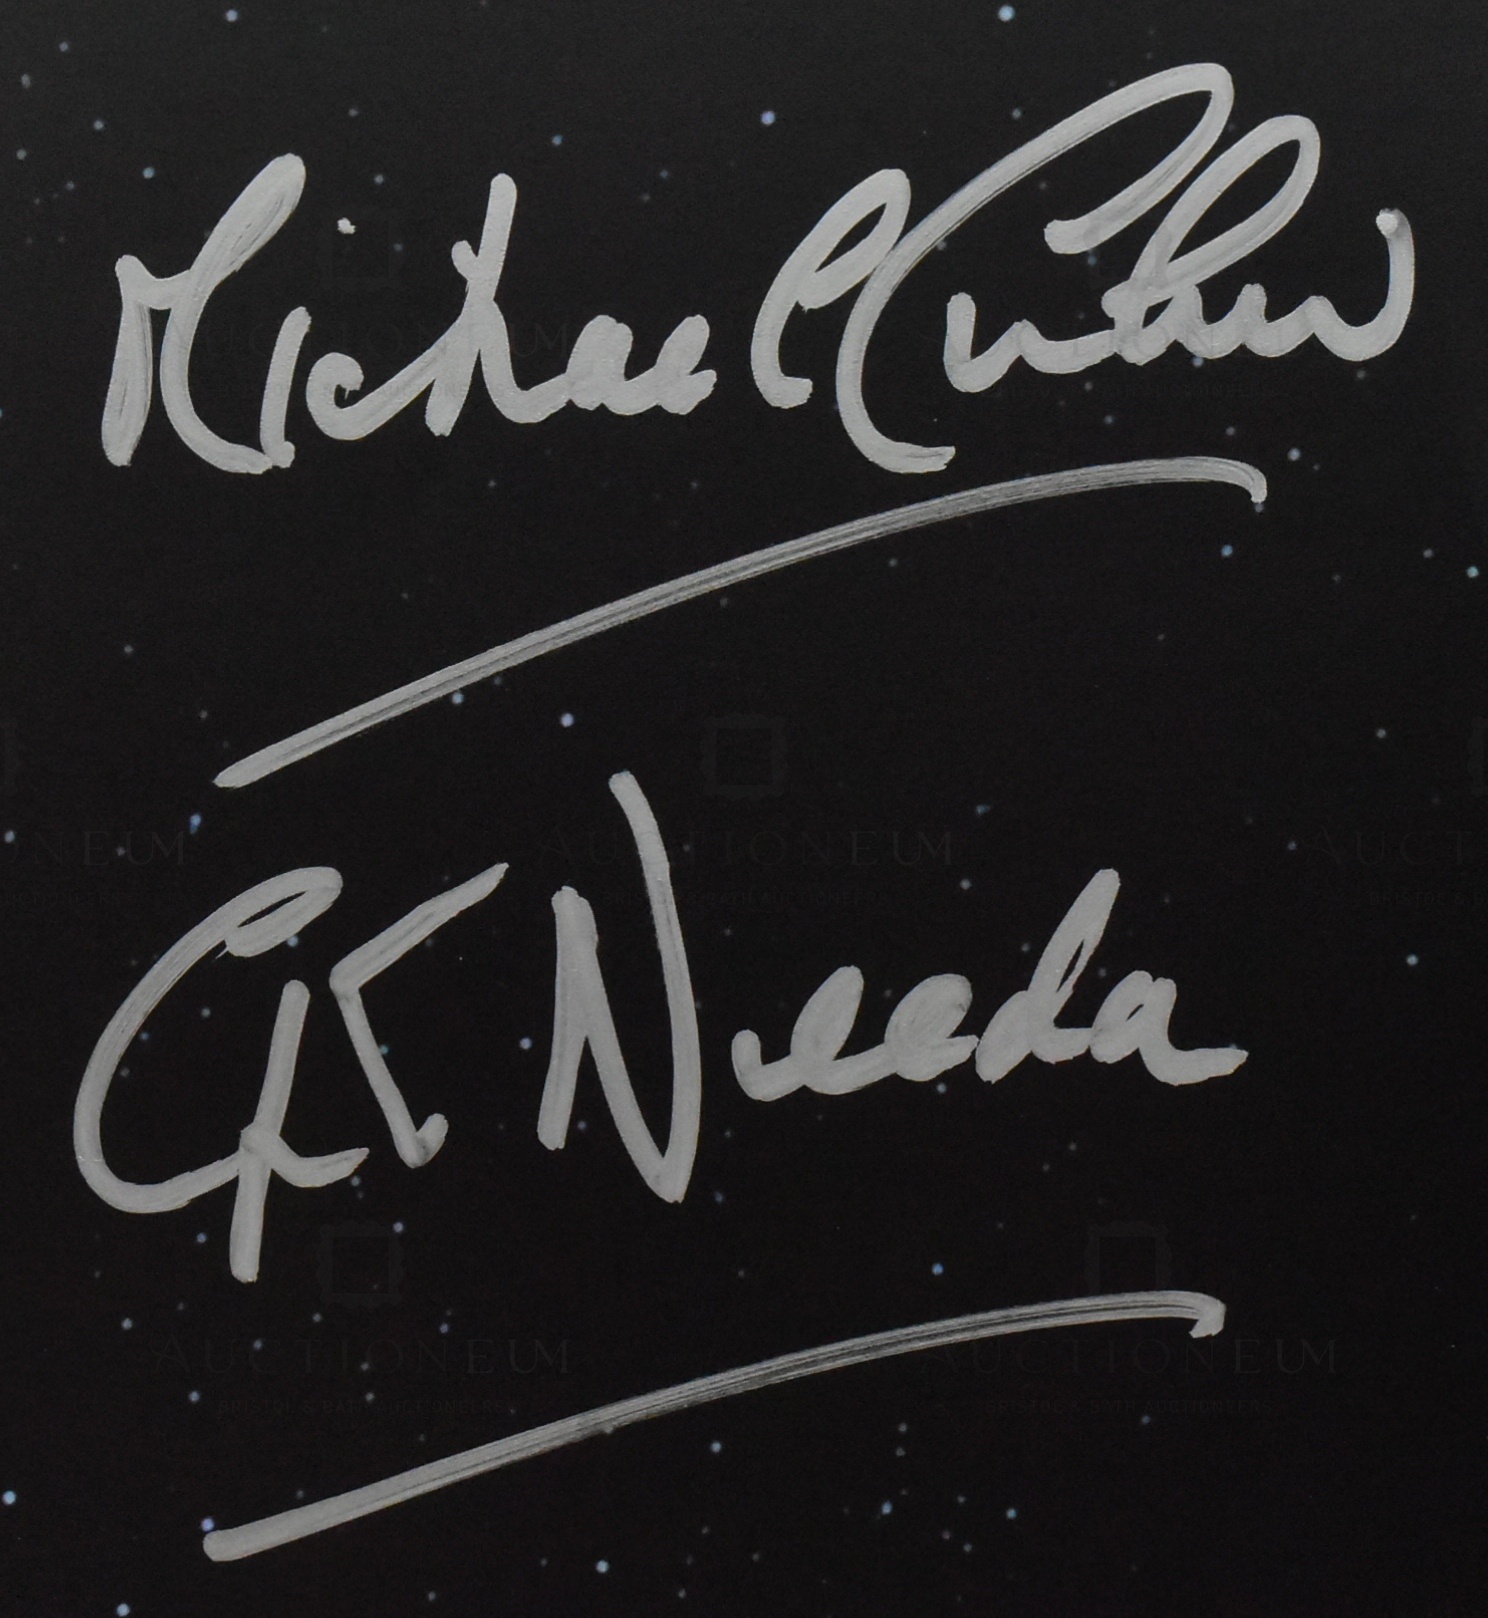 STAR WARS - MICHAEL CULVER - CAPT NEEDA - 11X14" SIGNED PHOTO - Image 2 of 2